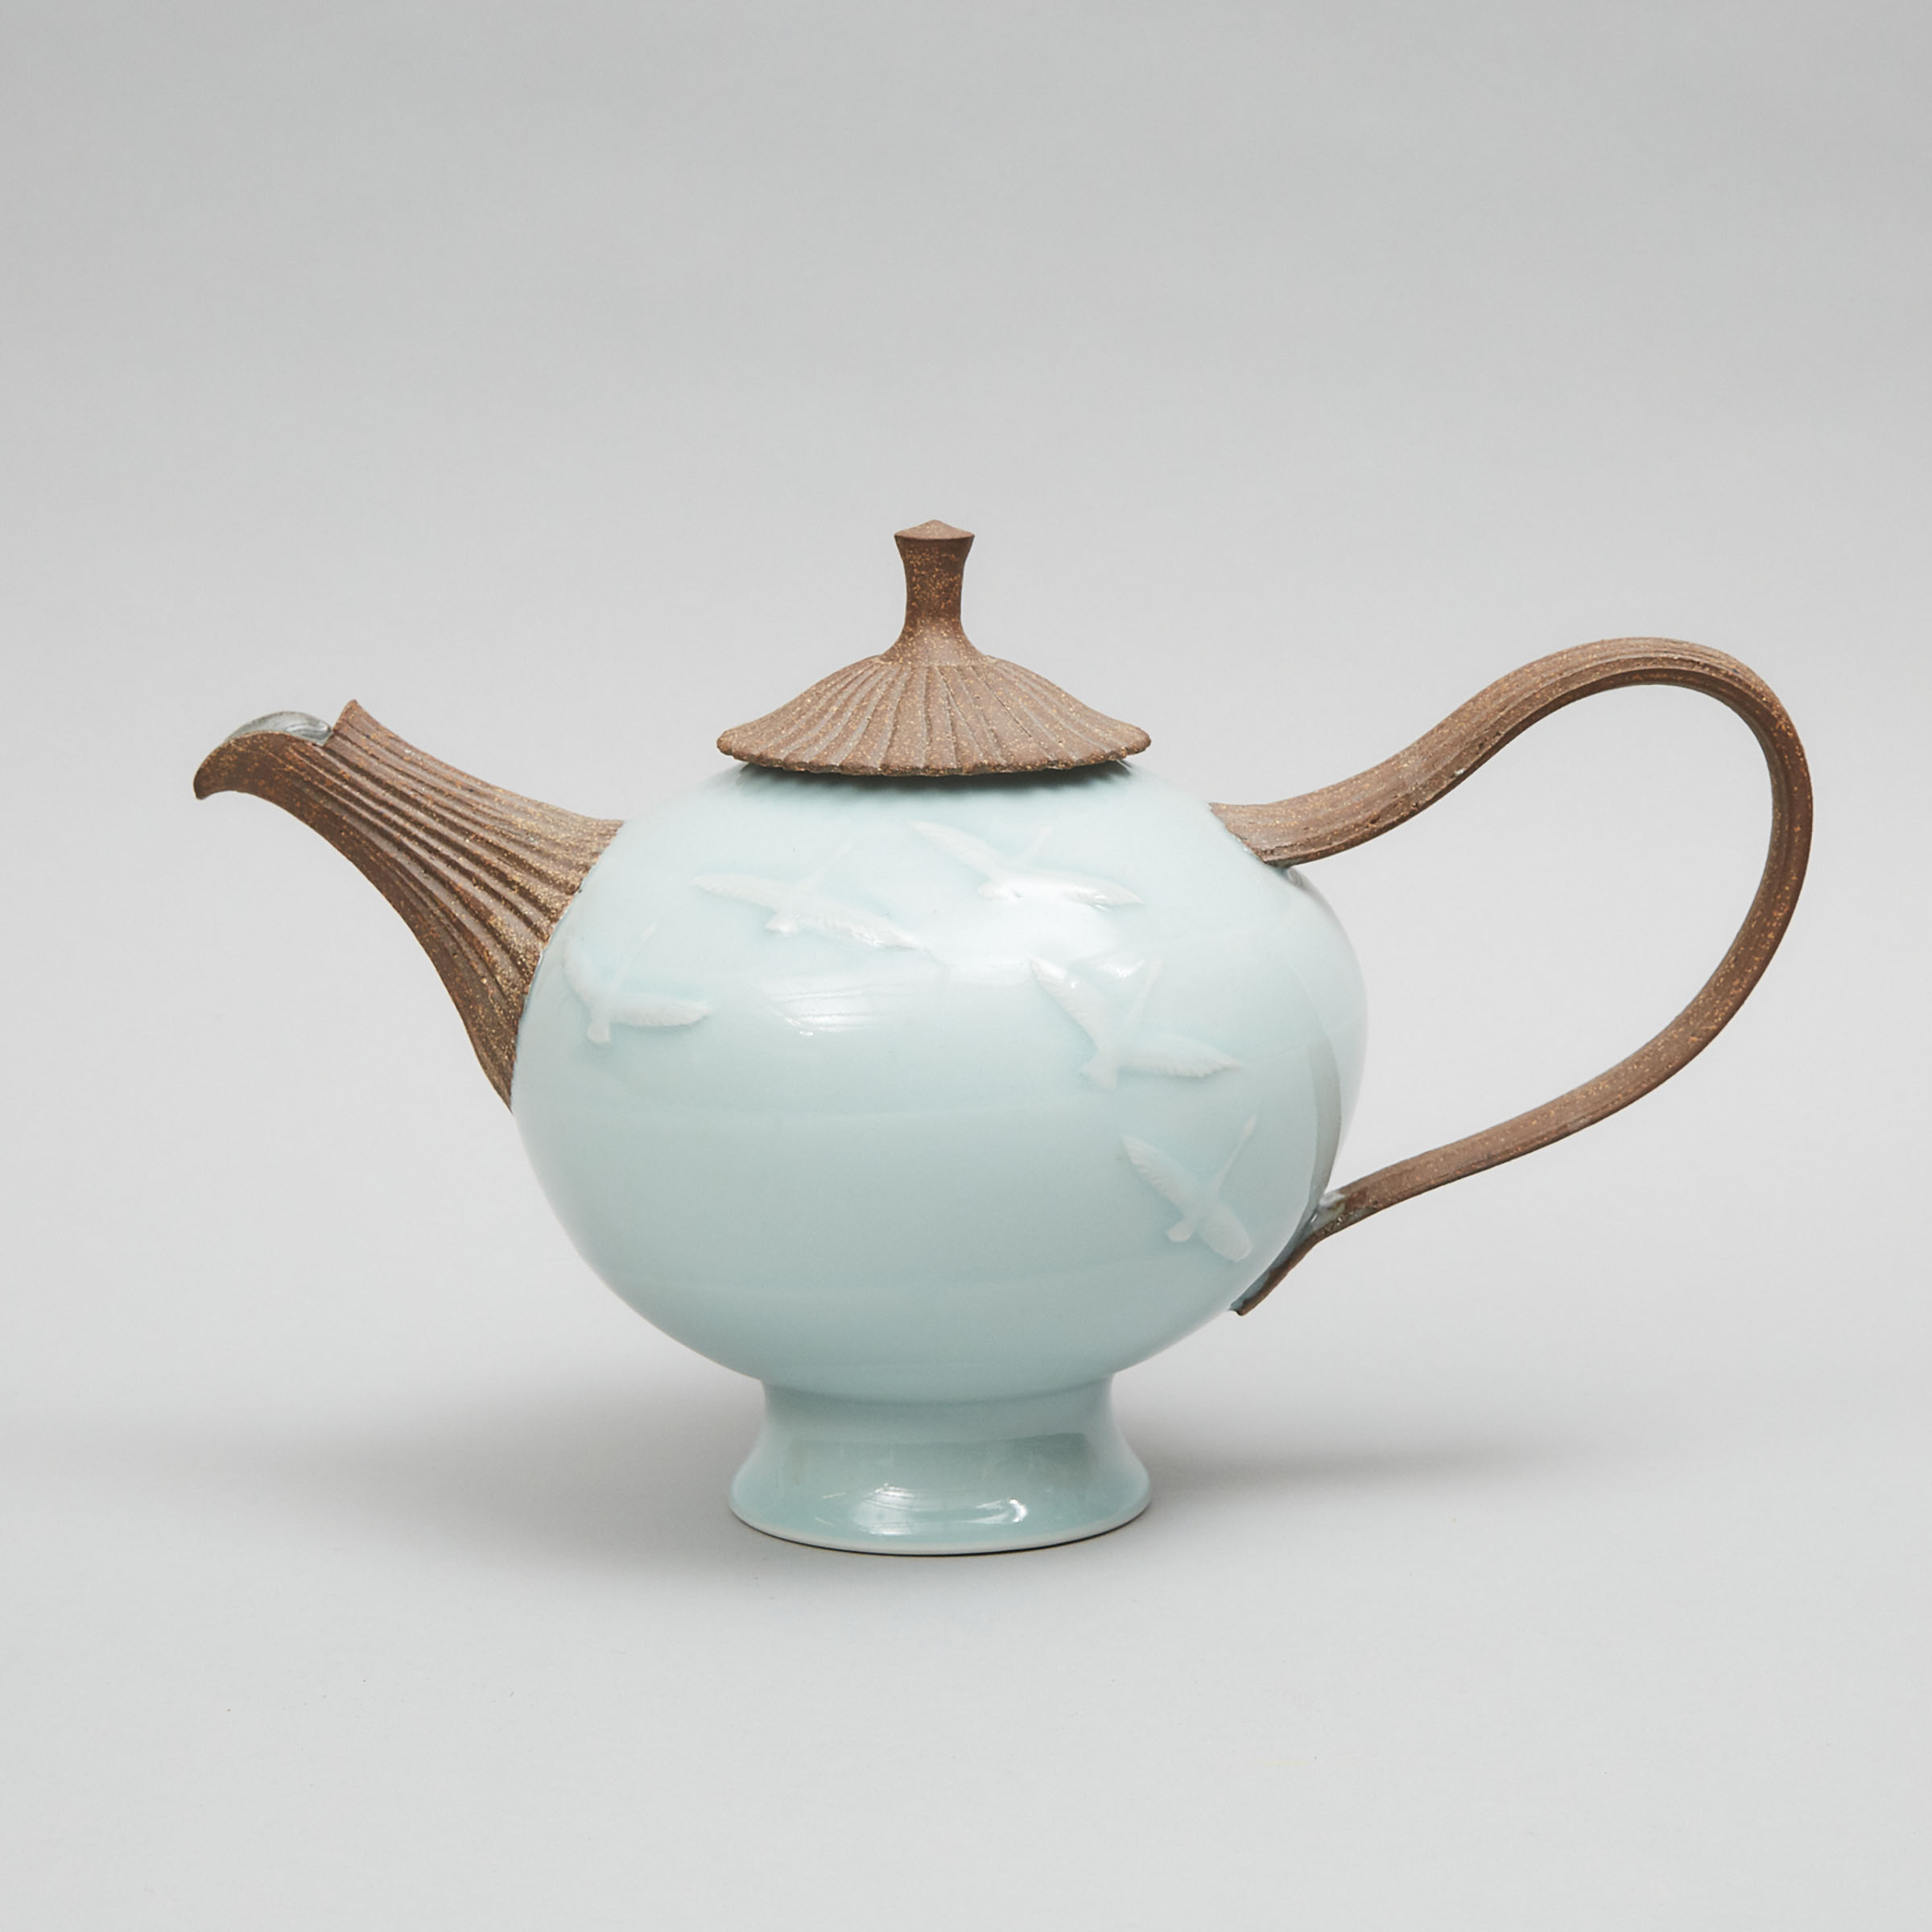 Bill Reddick (Canadian, b.1958), Celadon Glazed Teapot, 2001